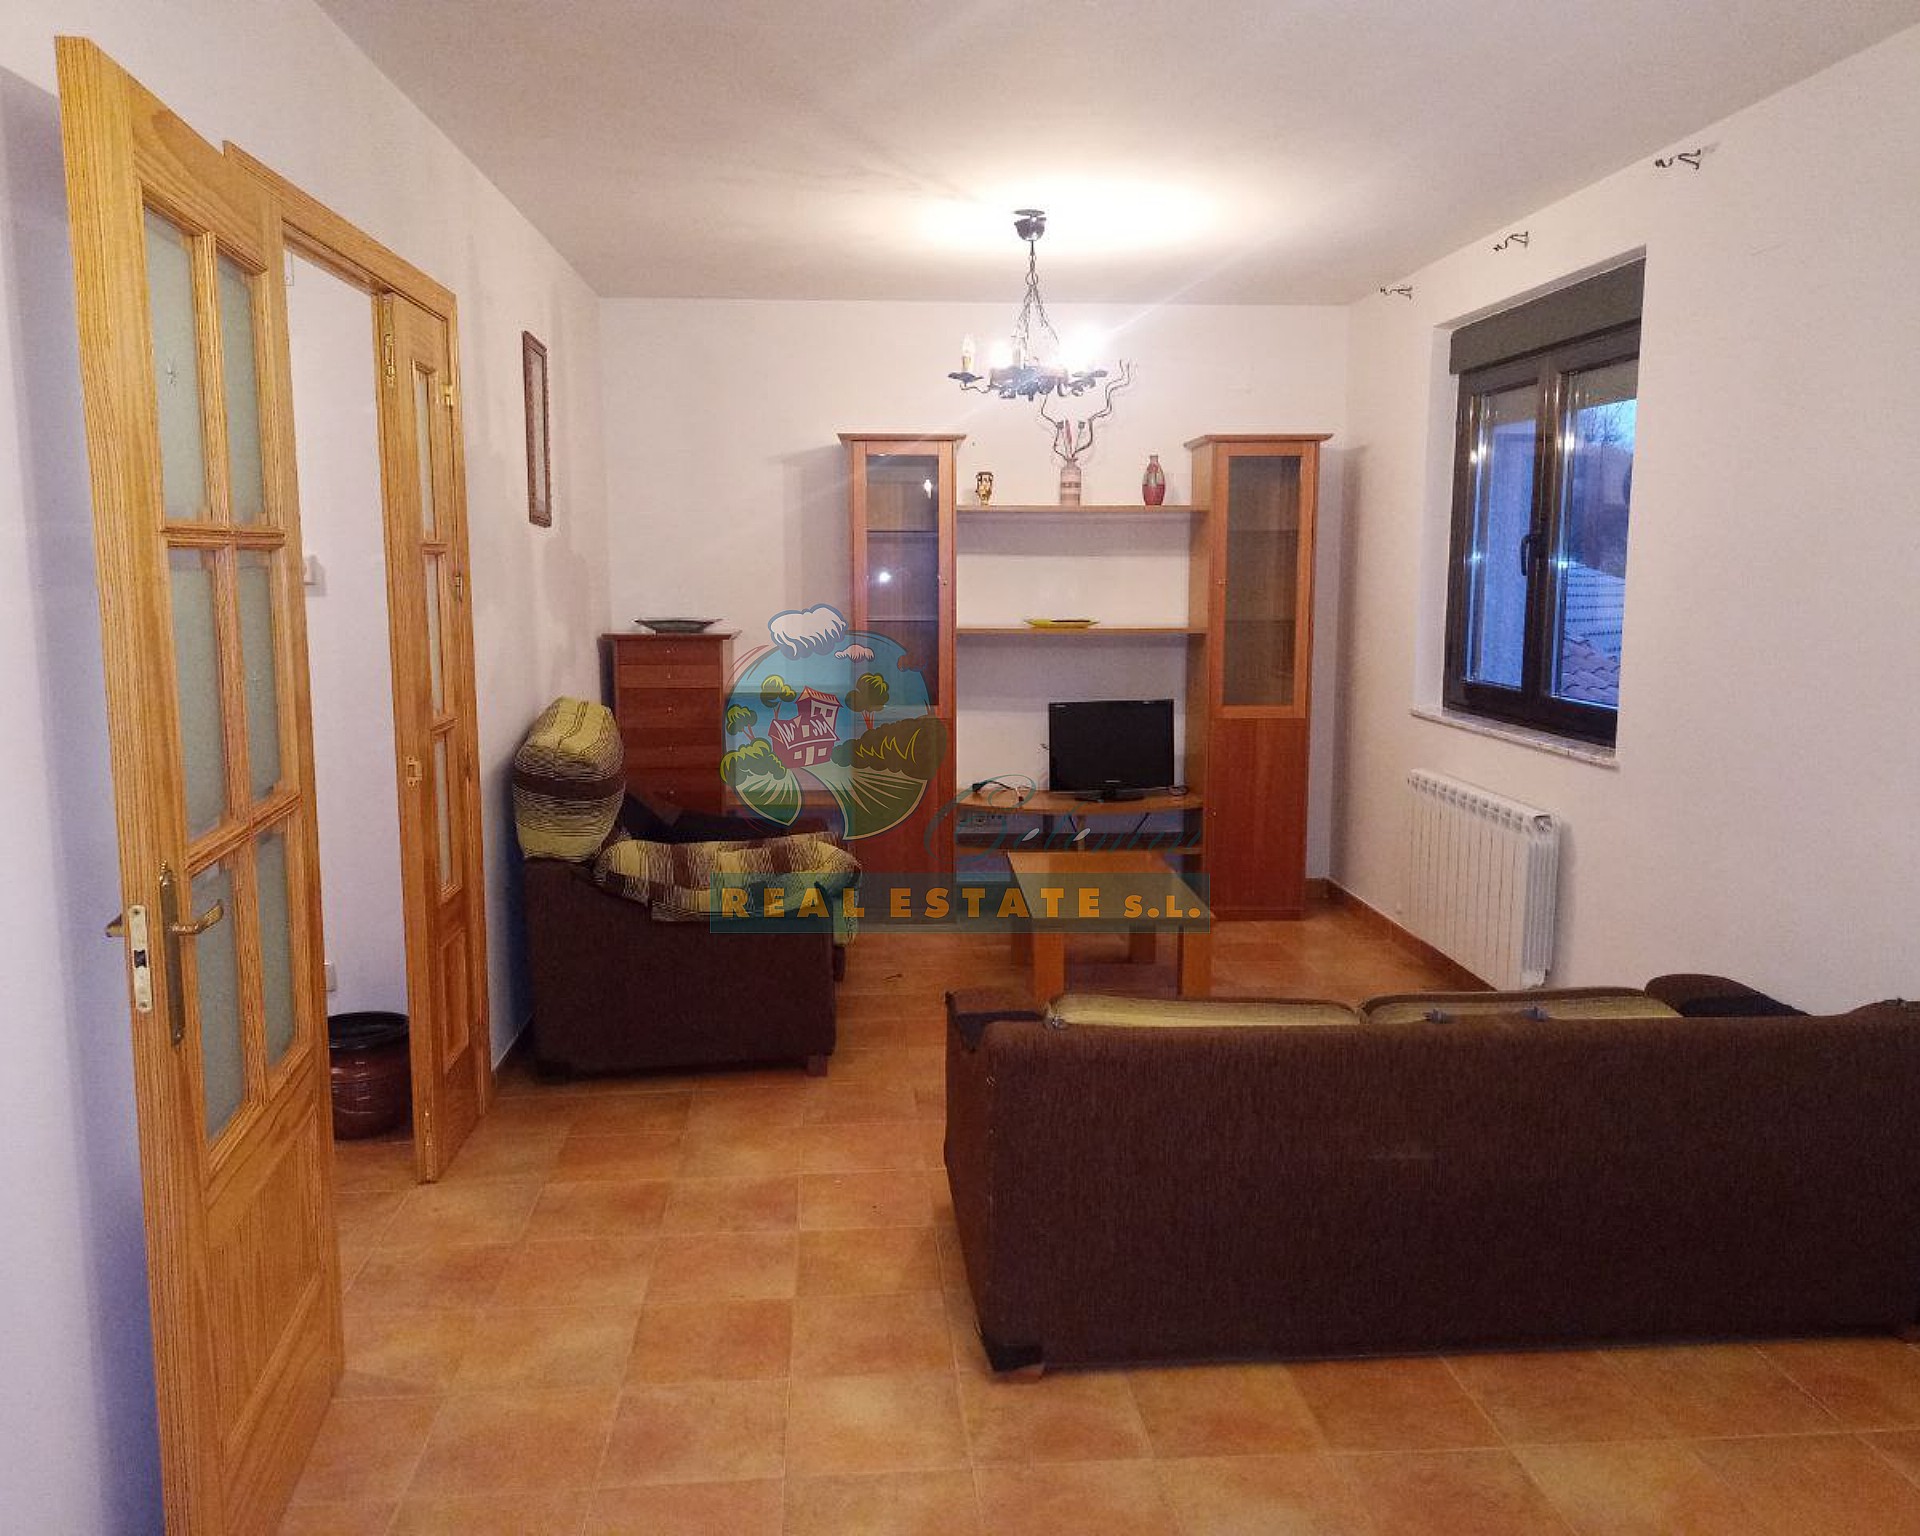 3 bedroom flat in Sierra de Gredos.